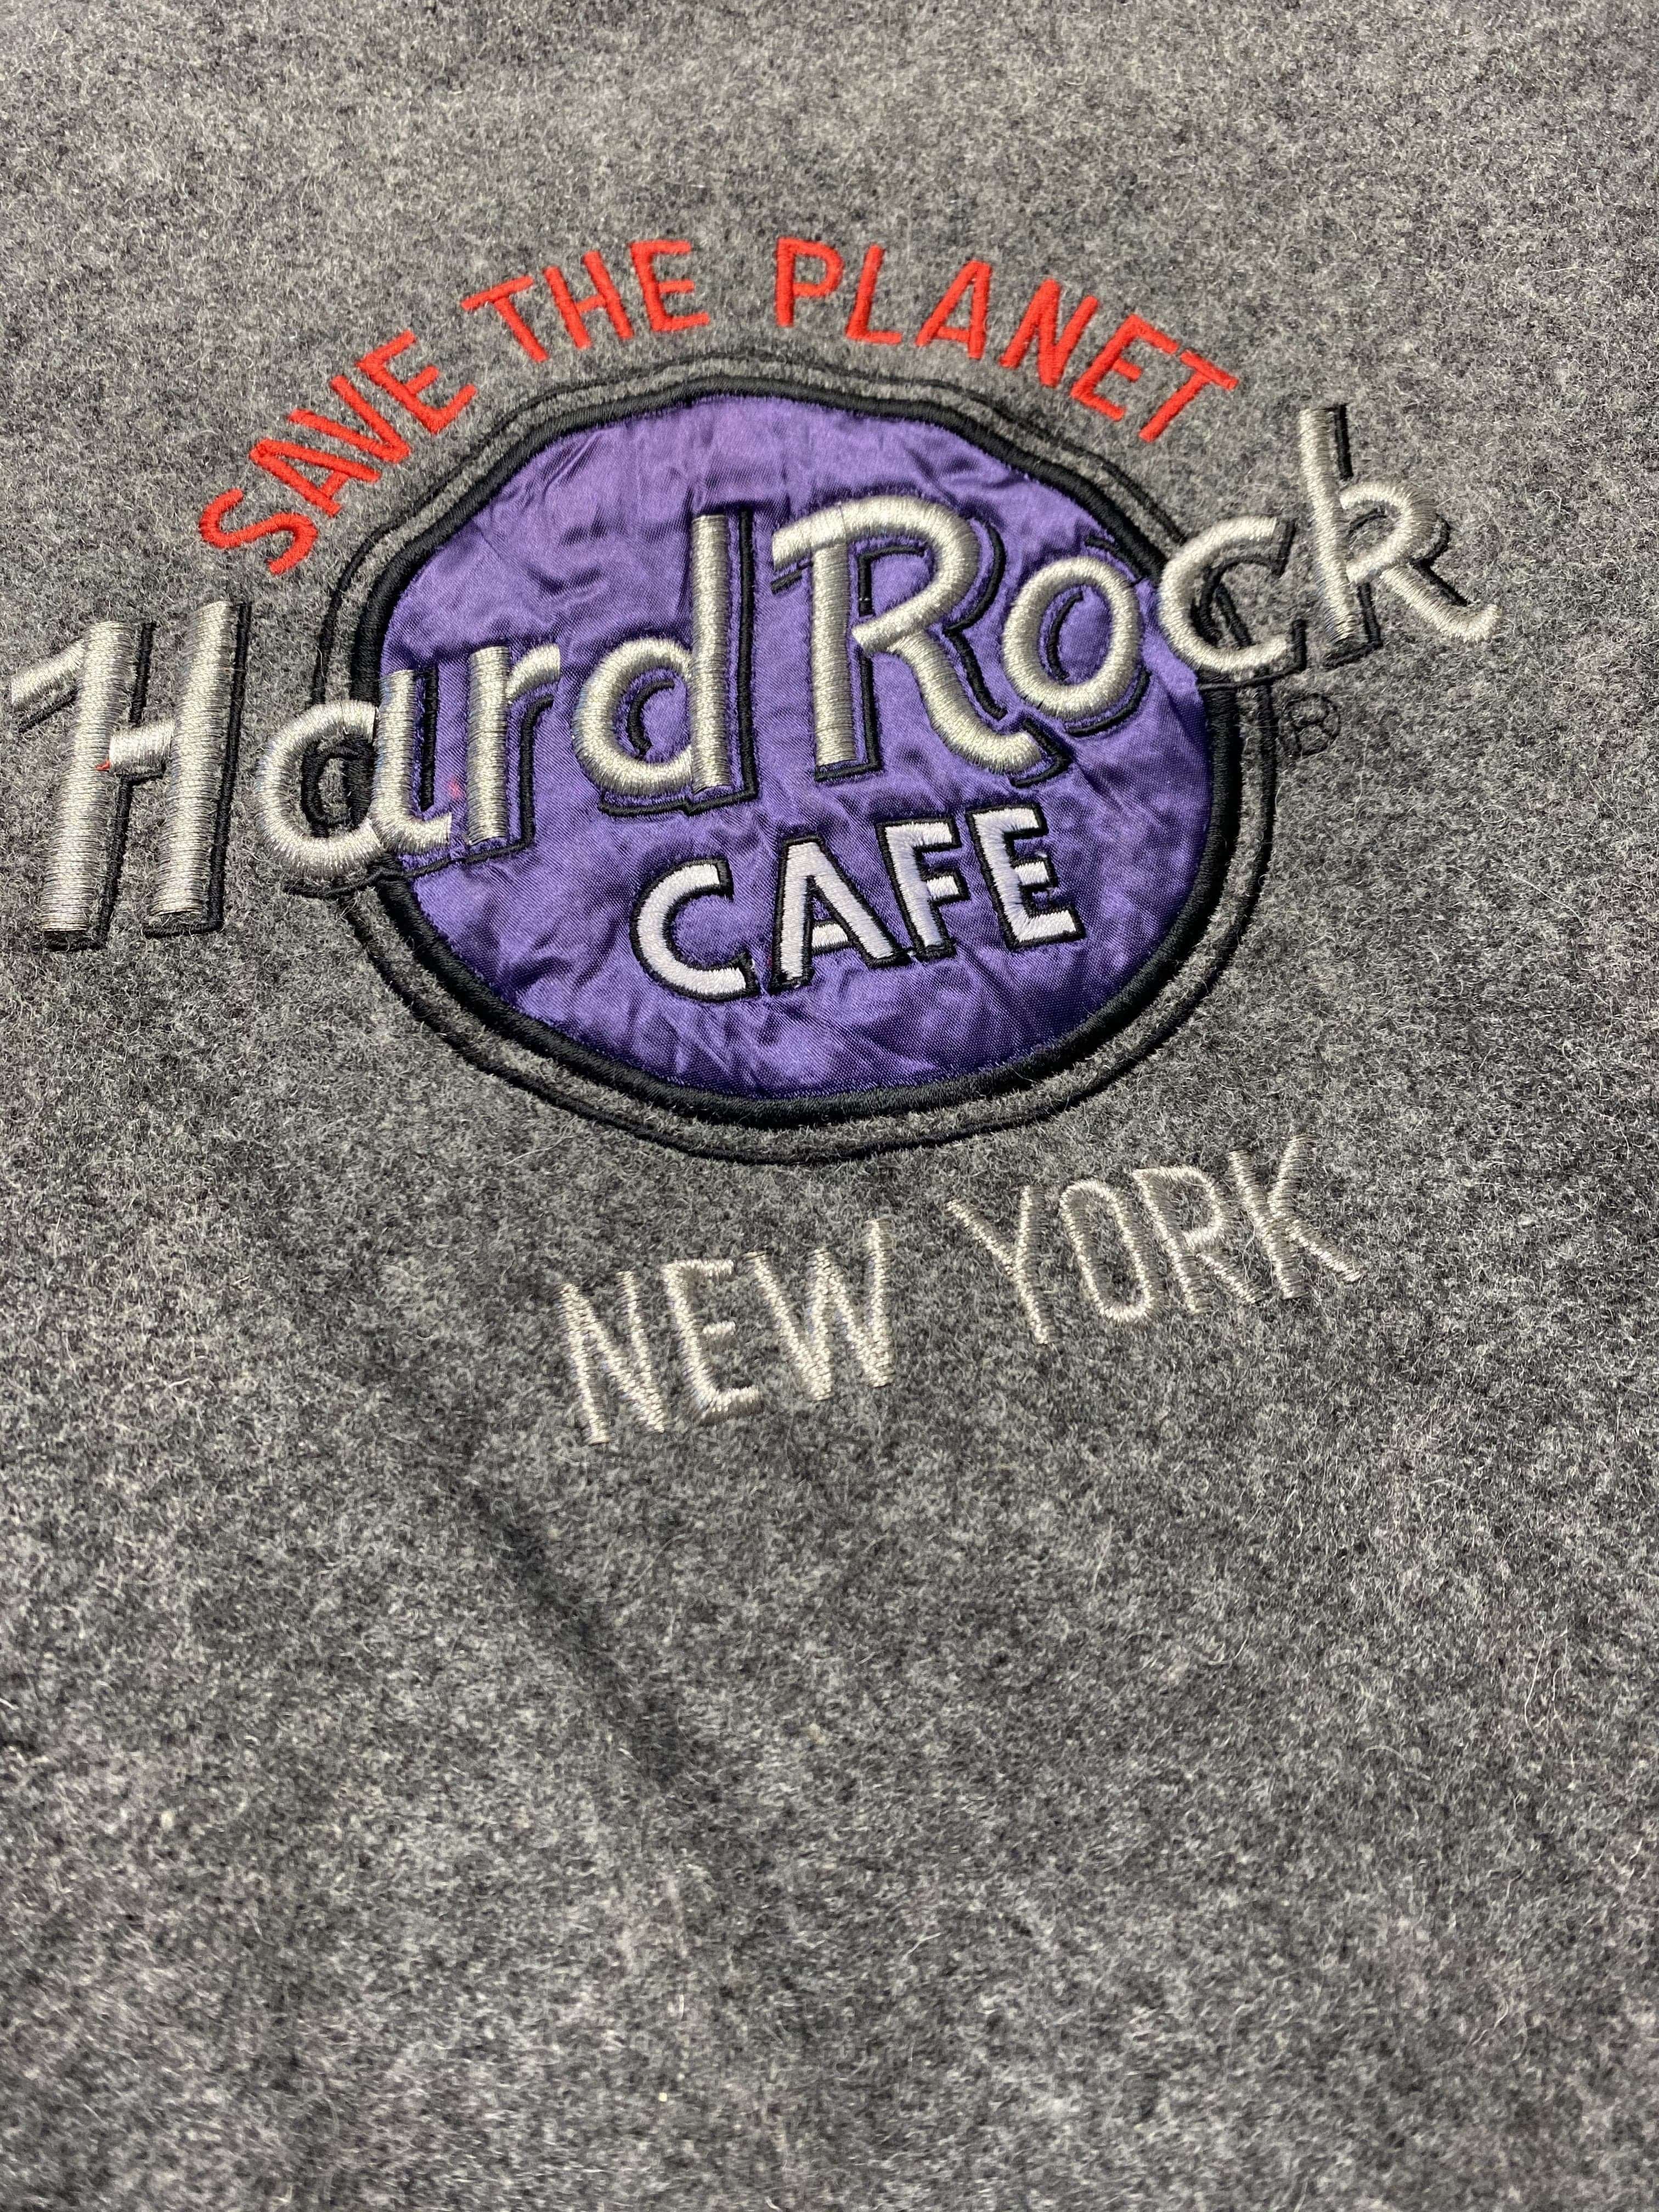 Hard Rock Cafe Leather Varsity Jacket Grey // Small - RHAGHOUSE VINTAGE